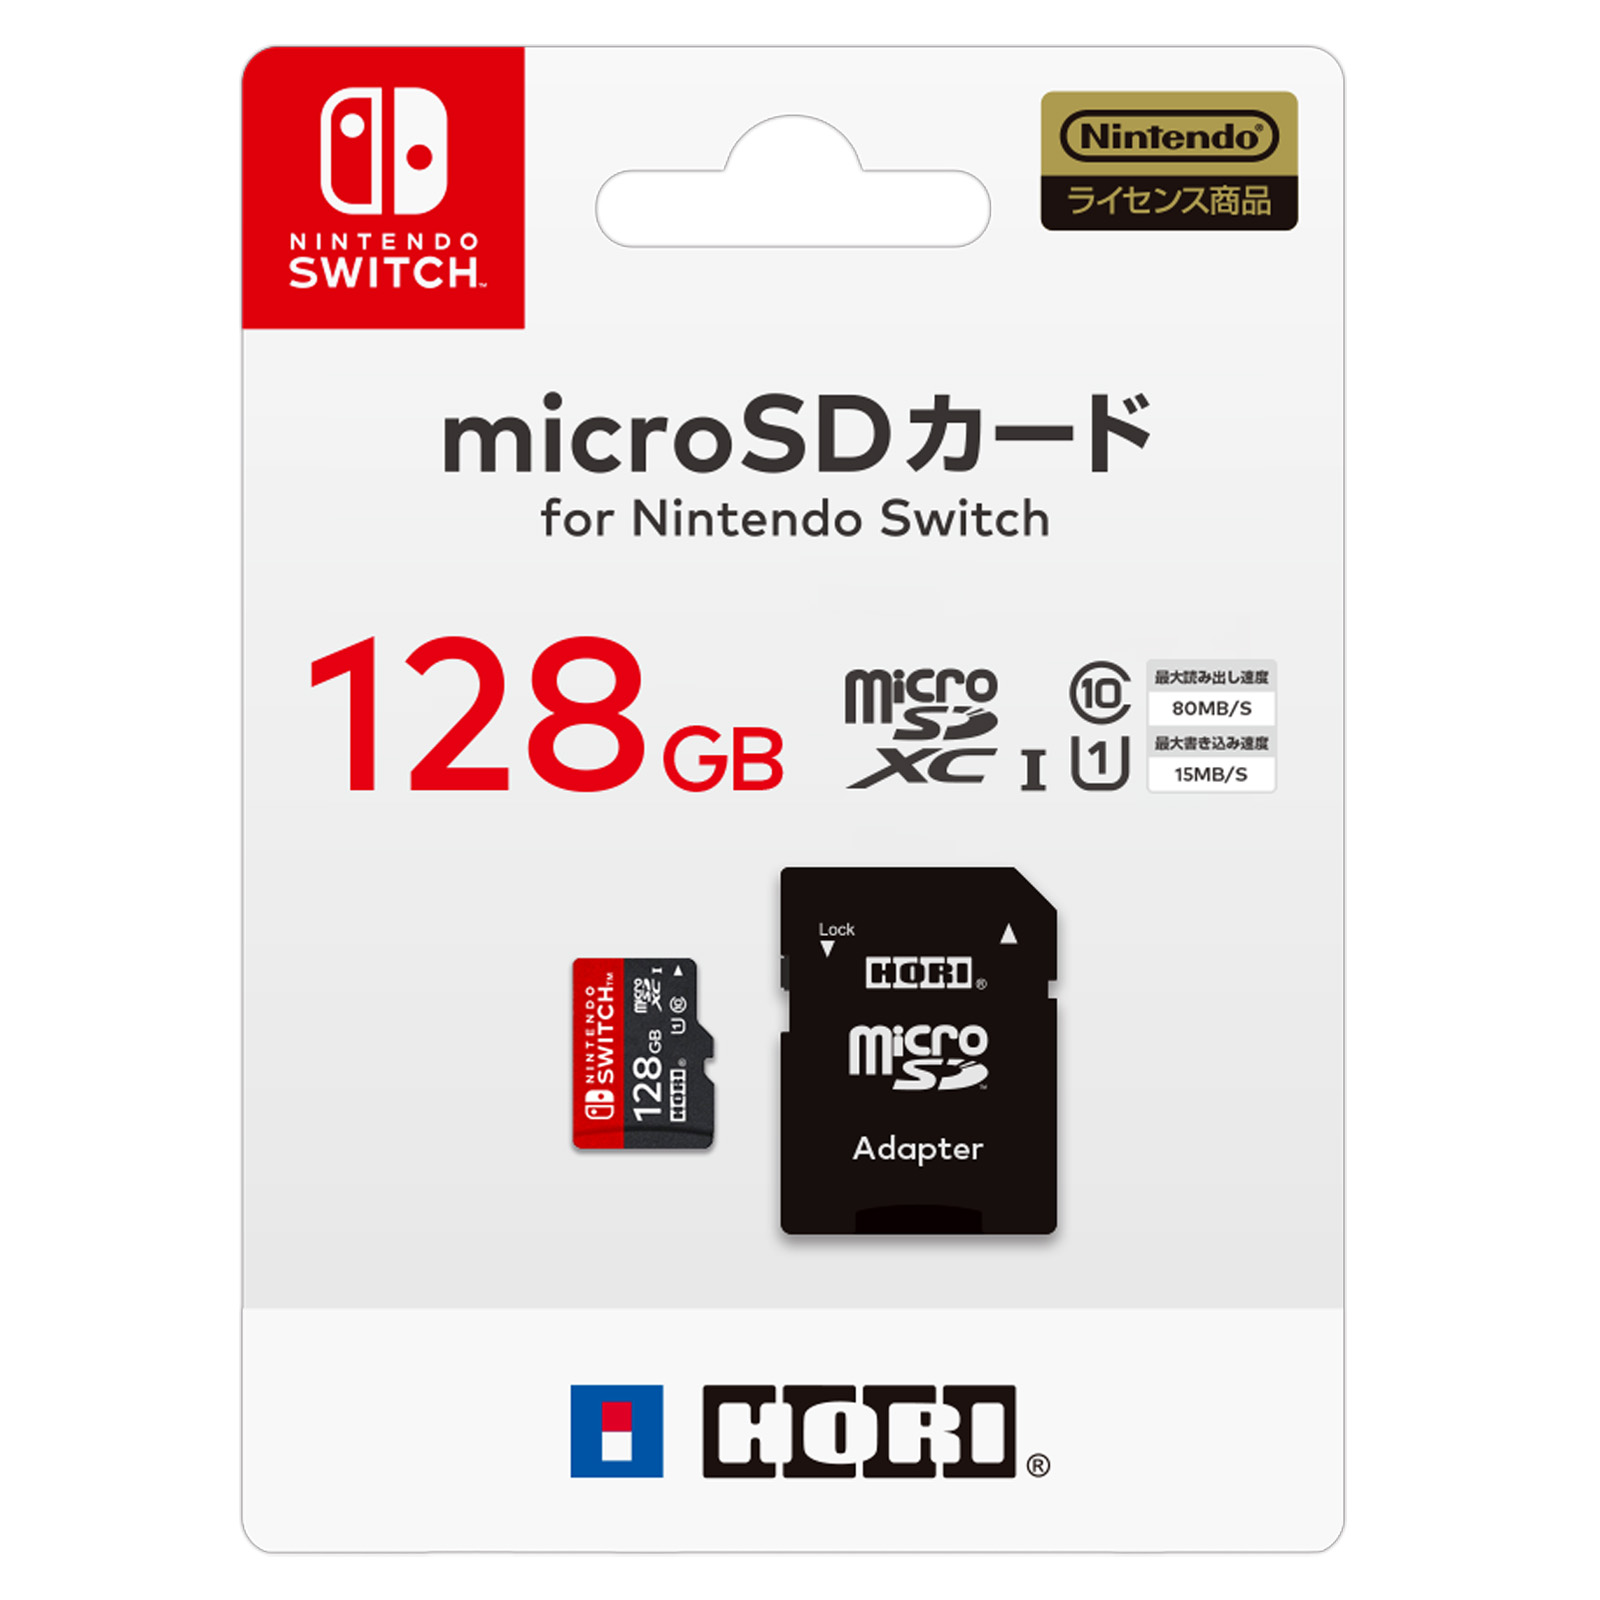  microSDカード for Nintendo Switch 128GB